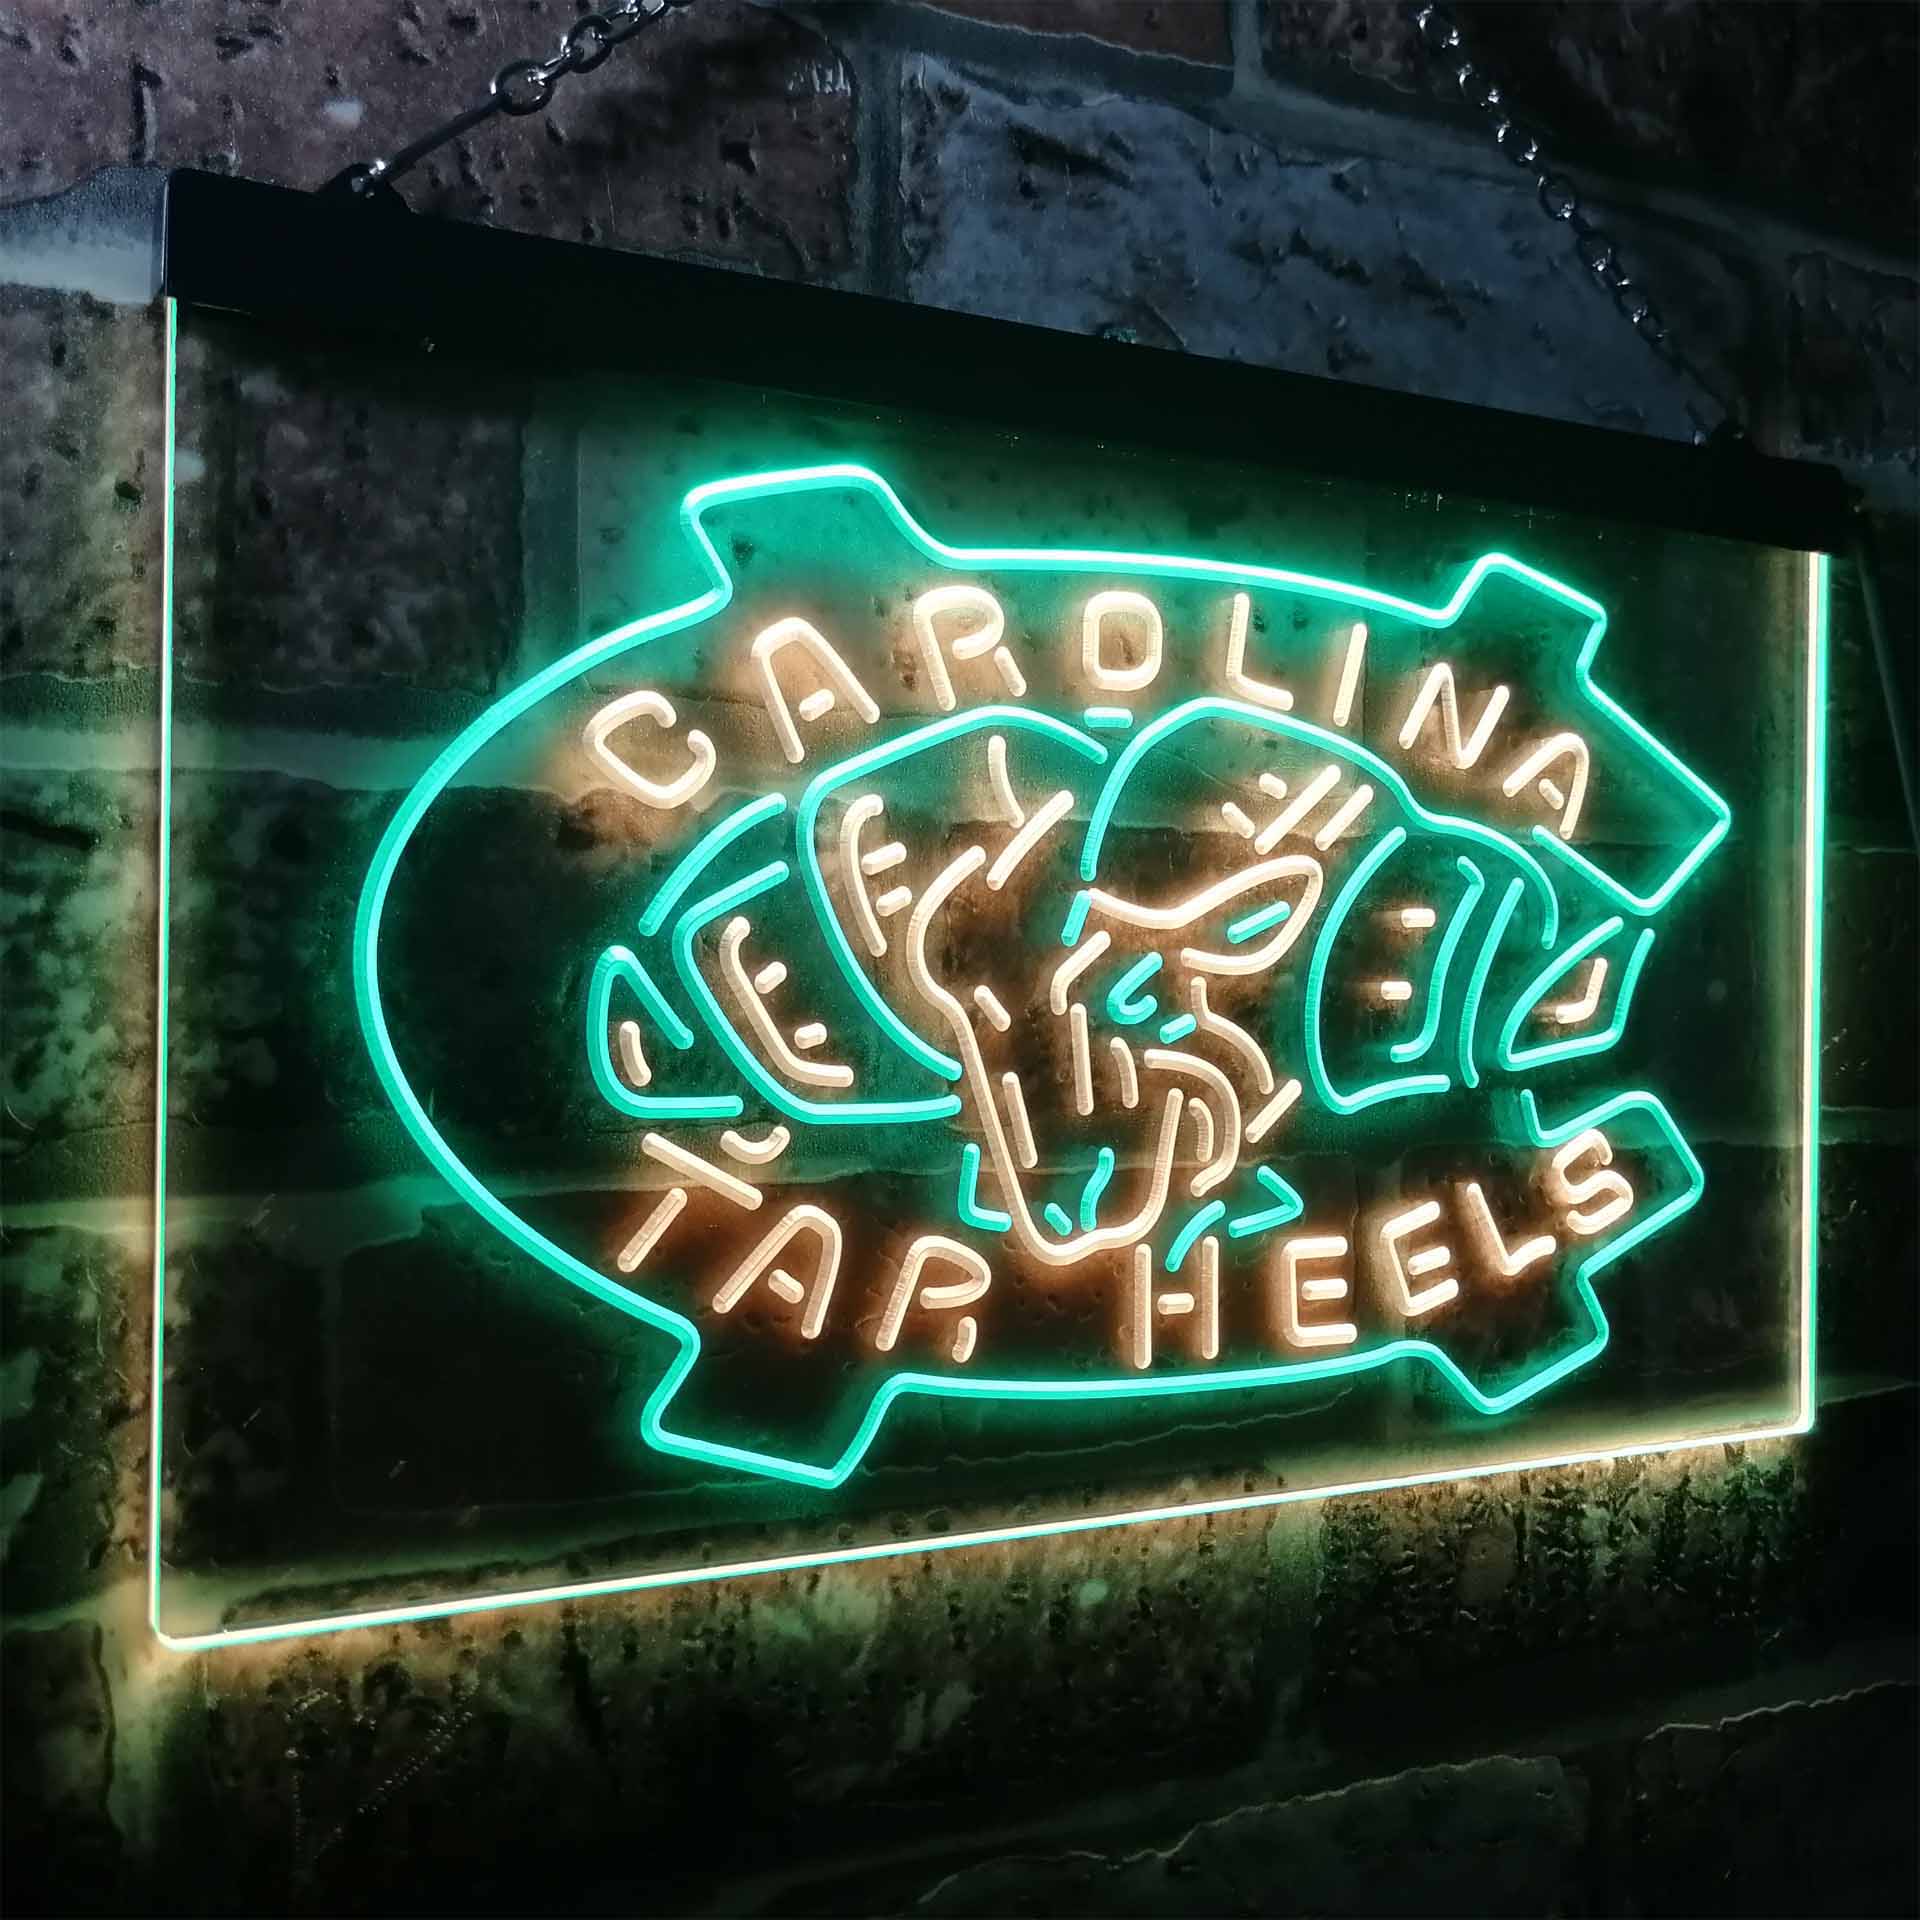 North Carolina Tar Heels Neon Light LED Sign - ProLedSign